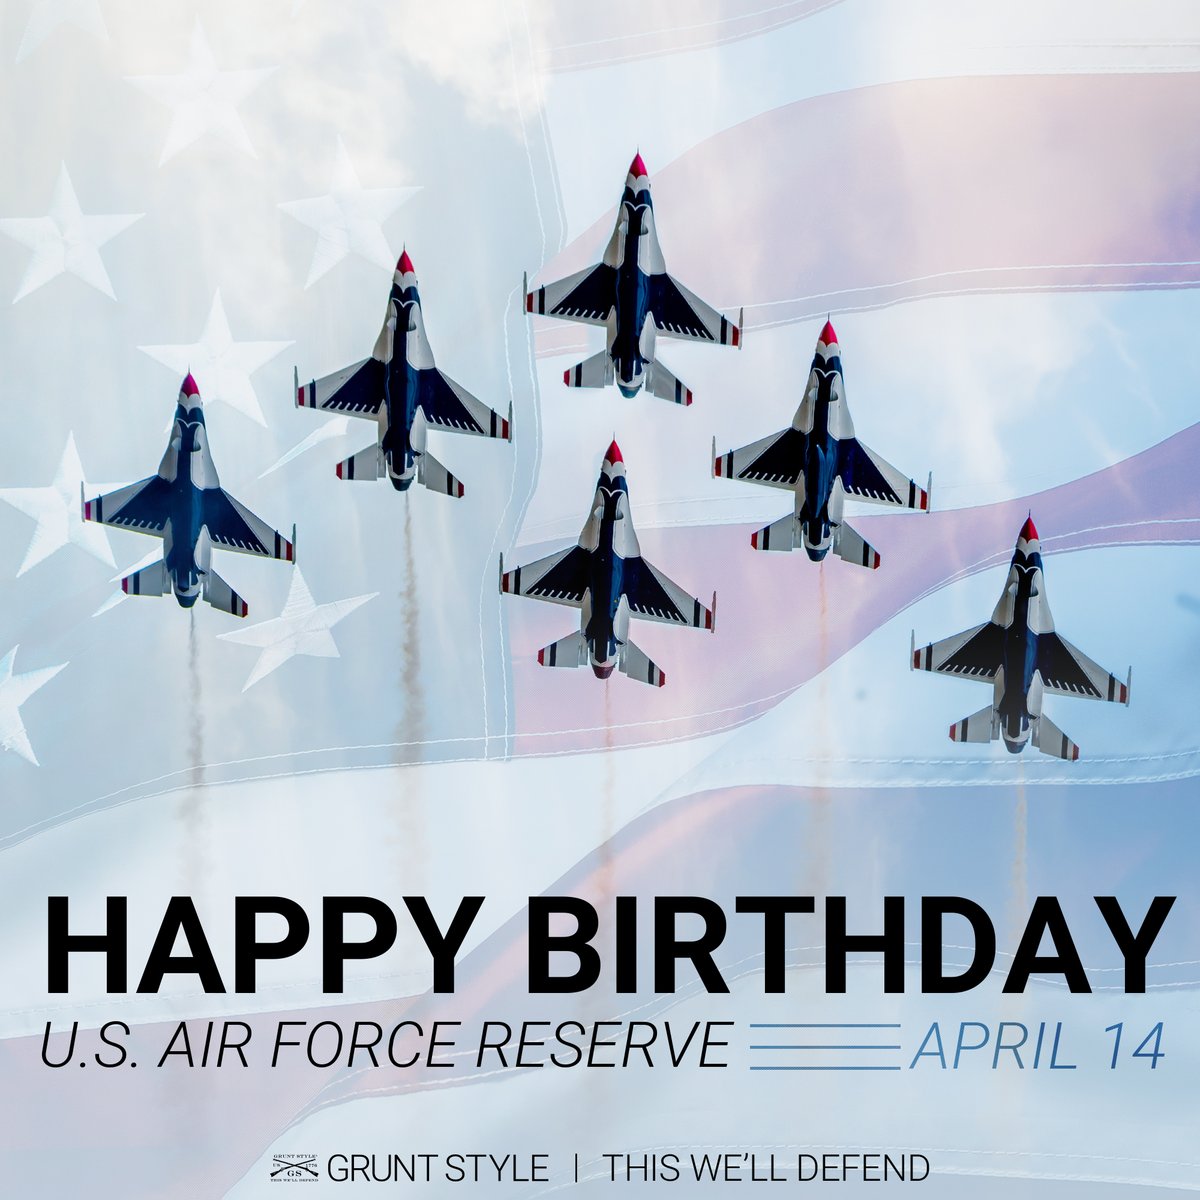 Happy birthday U.S. Airforce Reserve! gruntstyle.com #airforce #reserves #happybirthday #gruntstyle #america #freedom #bacon #fly #USAF